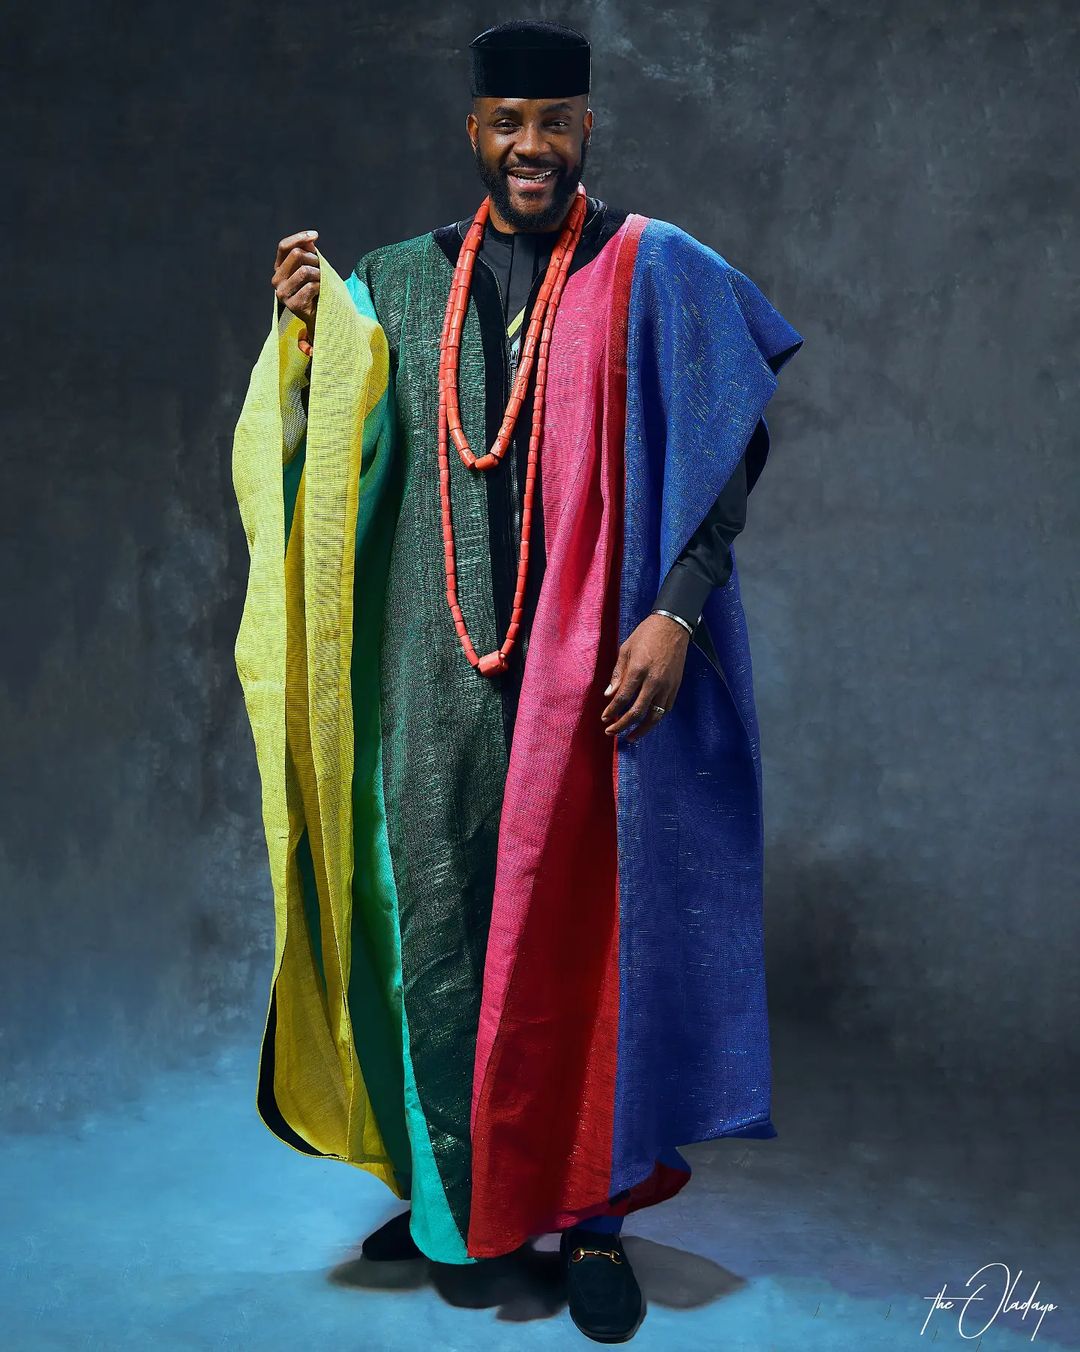 BBNaija Host Ebuka Obi-Uchendu Proved He Is The King Of Agbadas With This Look | BellaNaija